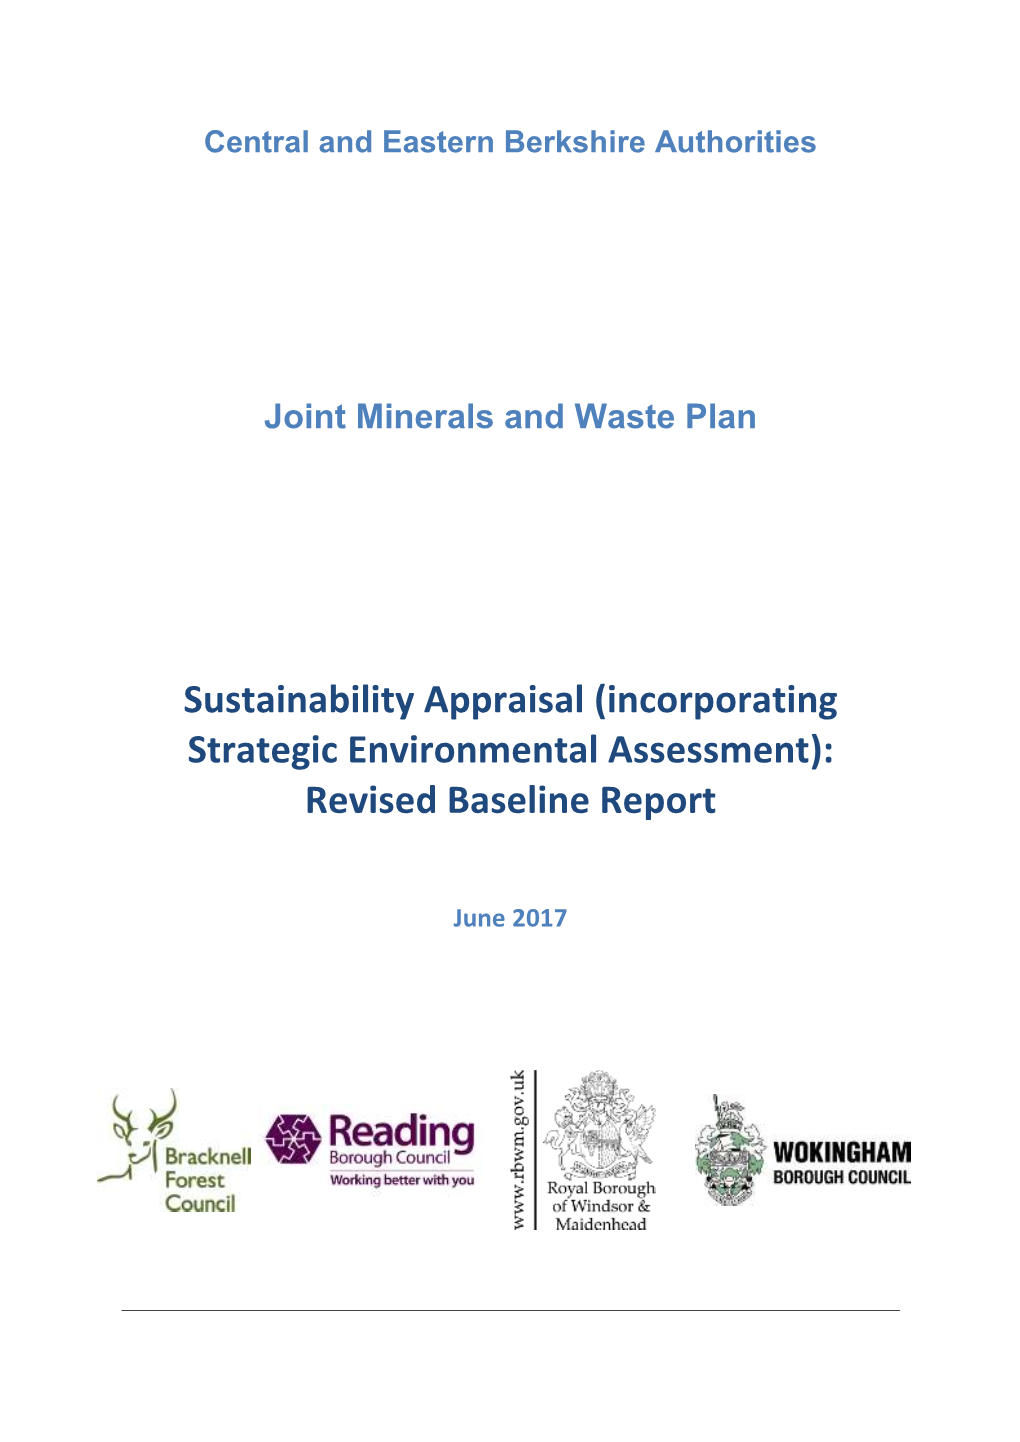 Sustainability Appraisal (Incorporating Strategic Environmental Assessment): Revised Baseline Report